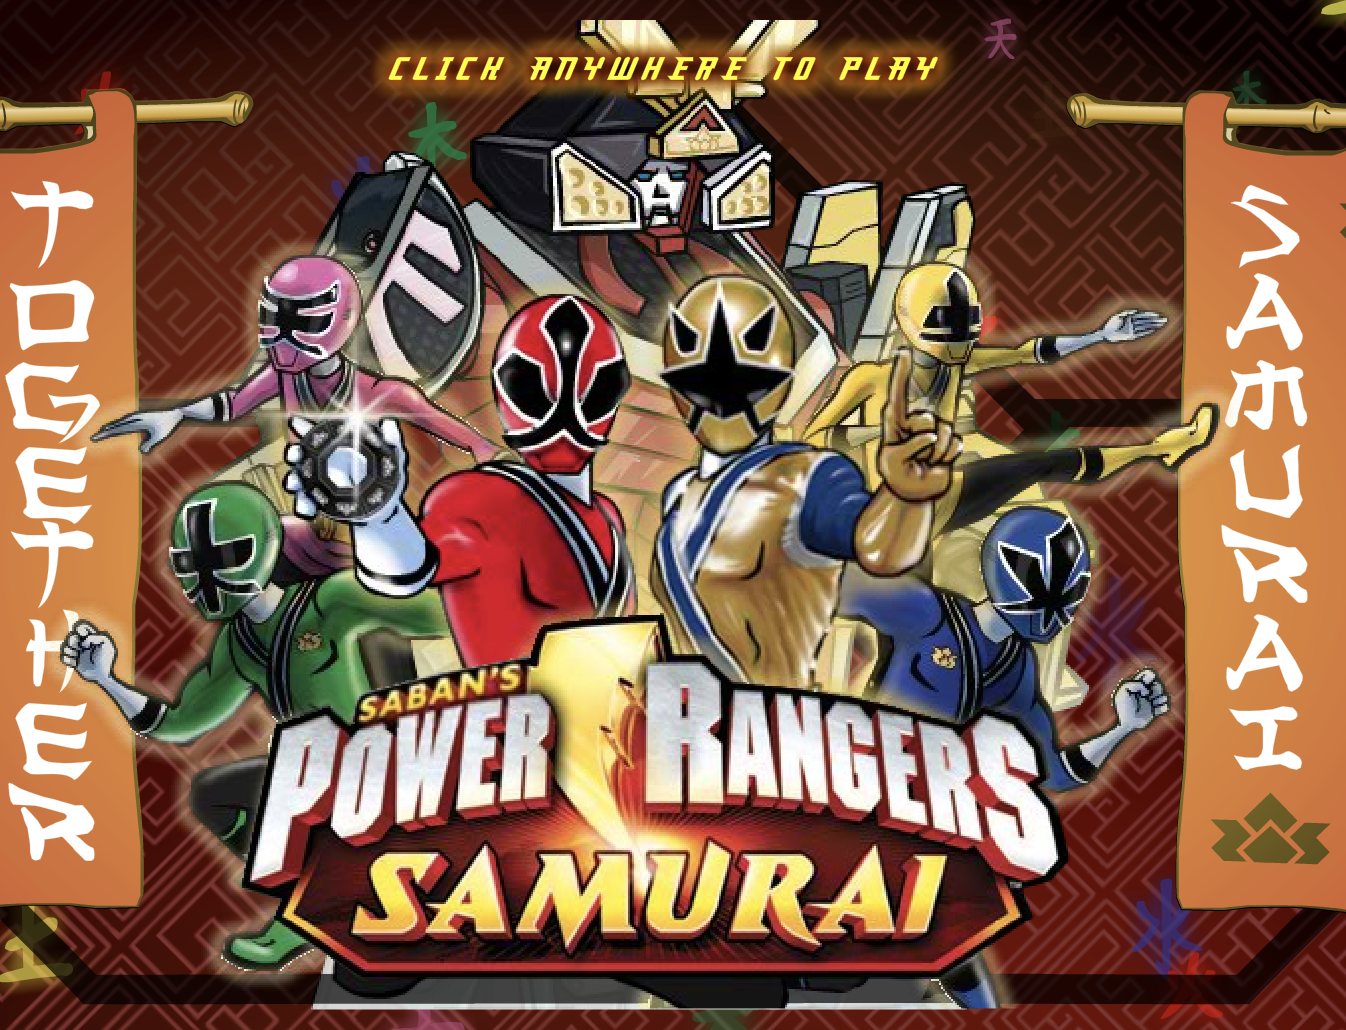 download power rangers samurai game